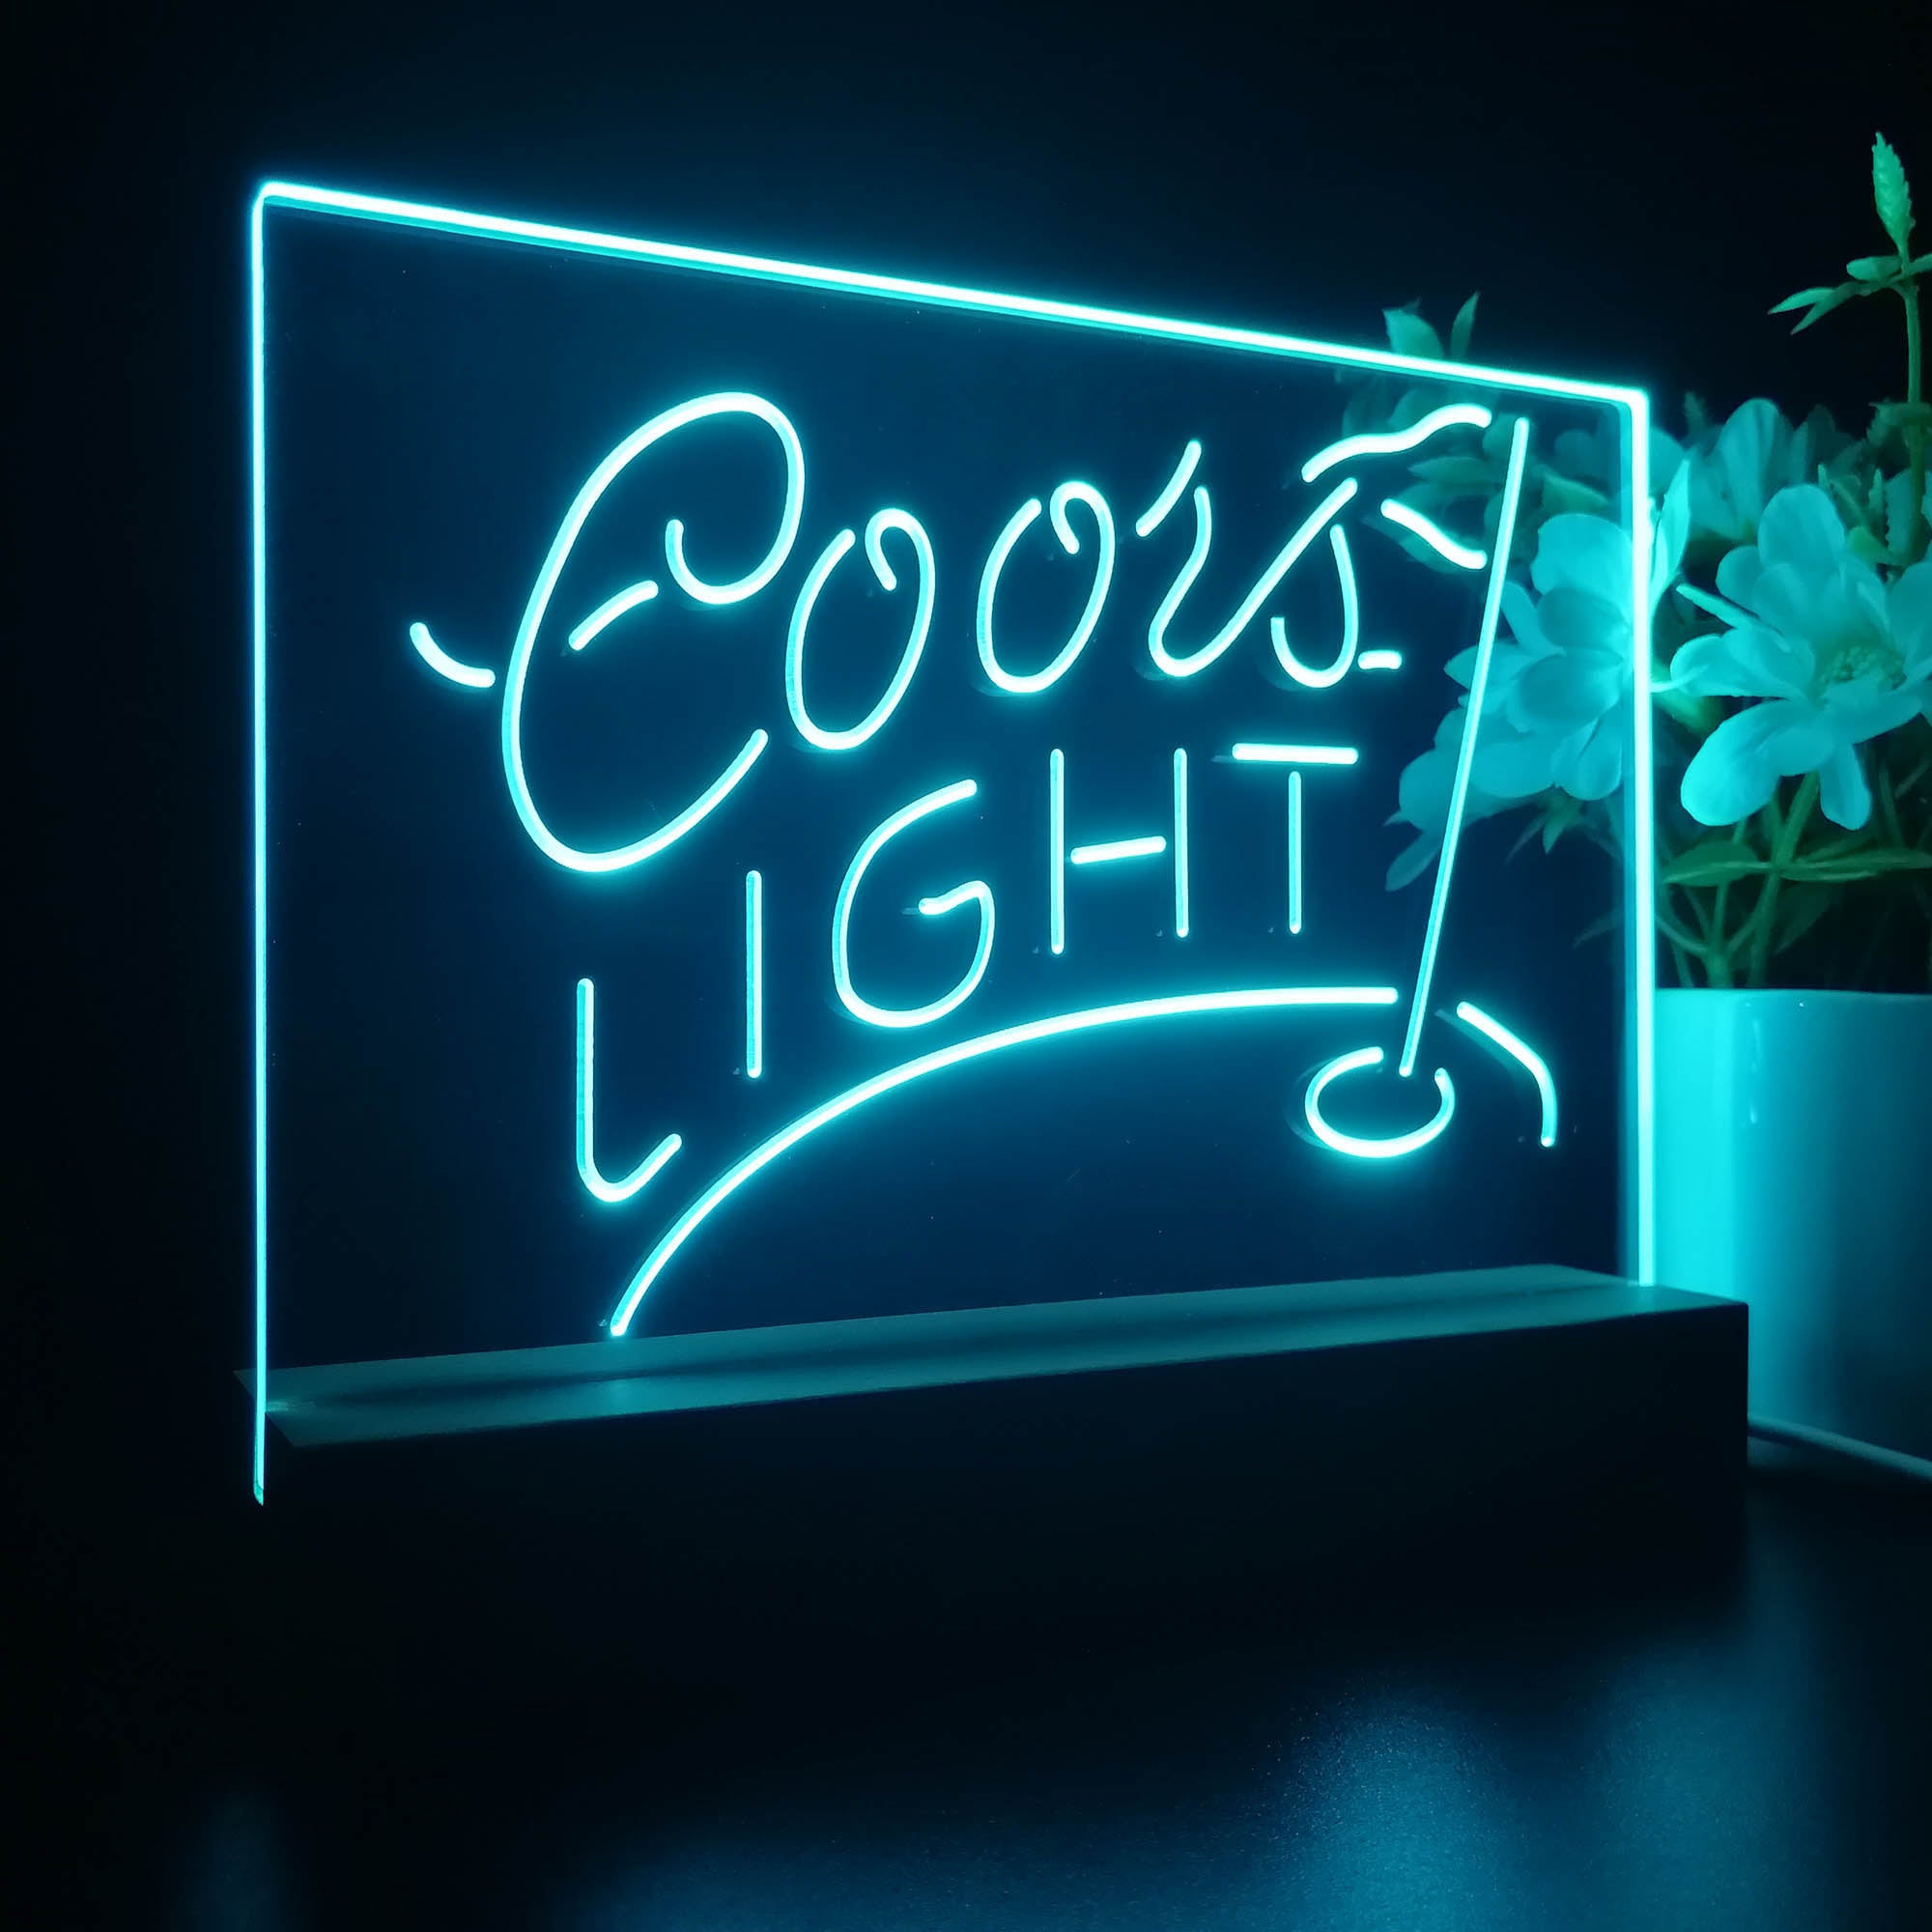 Coors Light Golf Night Light LED Sign